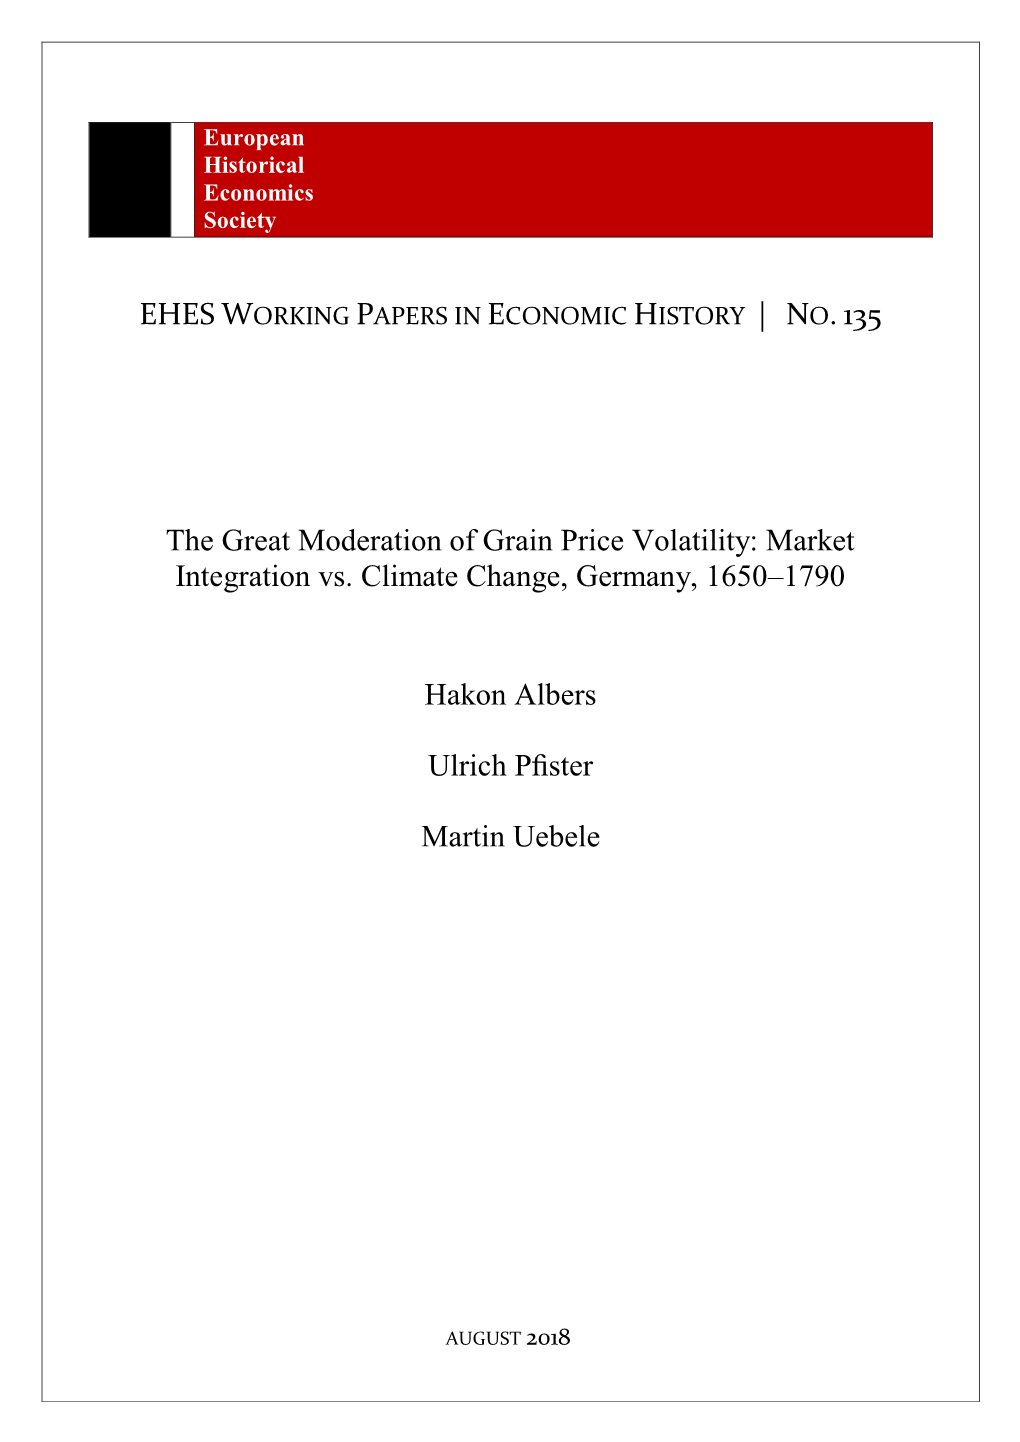 The Great Moderation of Grain Price Volatility: Market Integration Vs